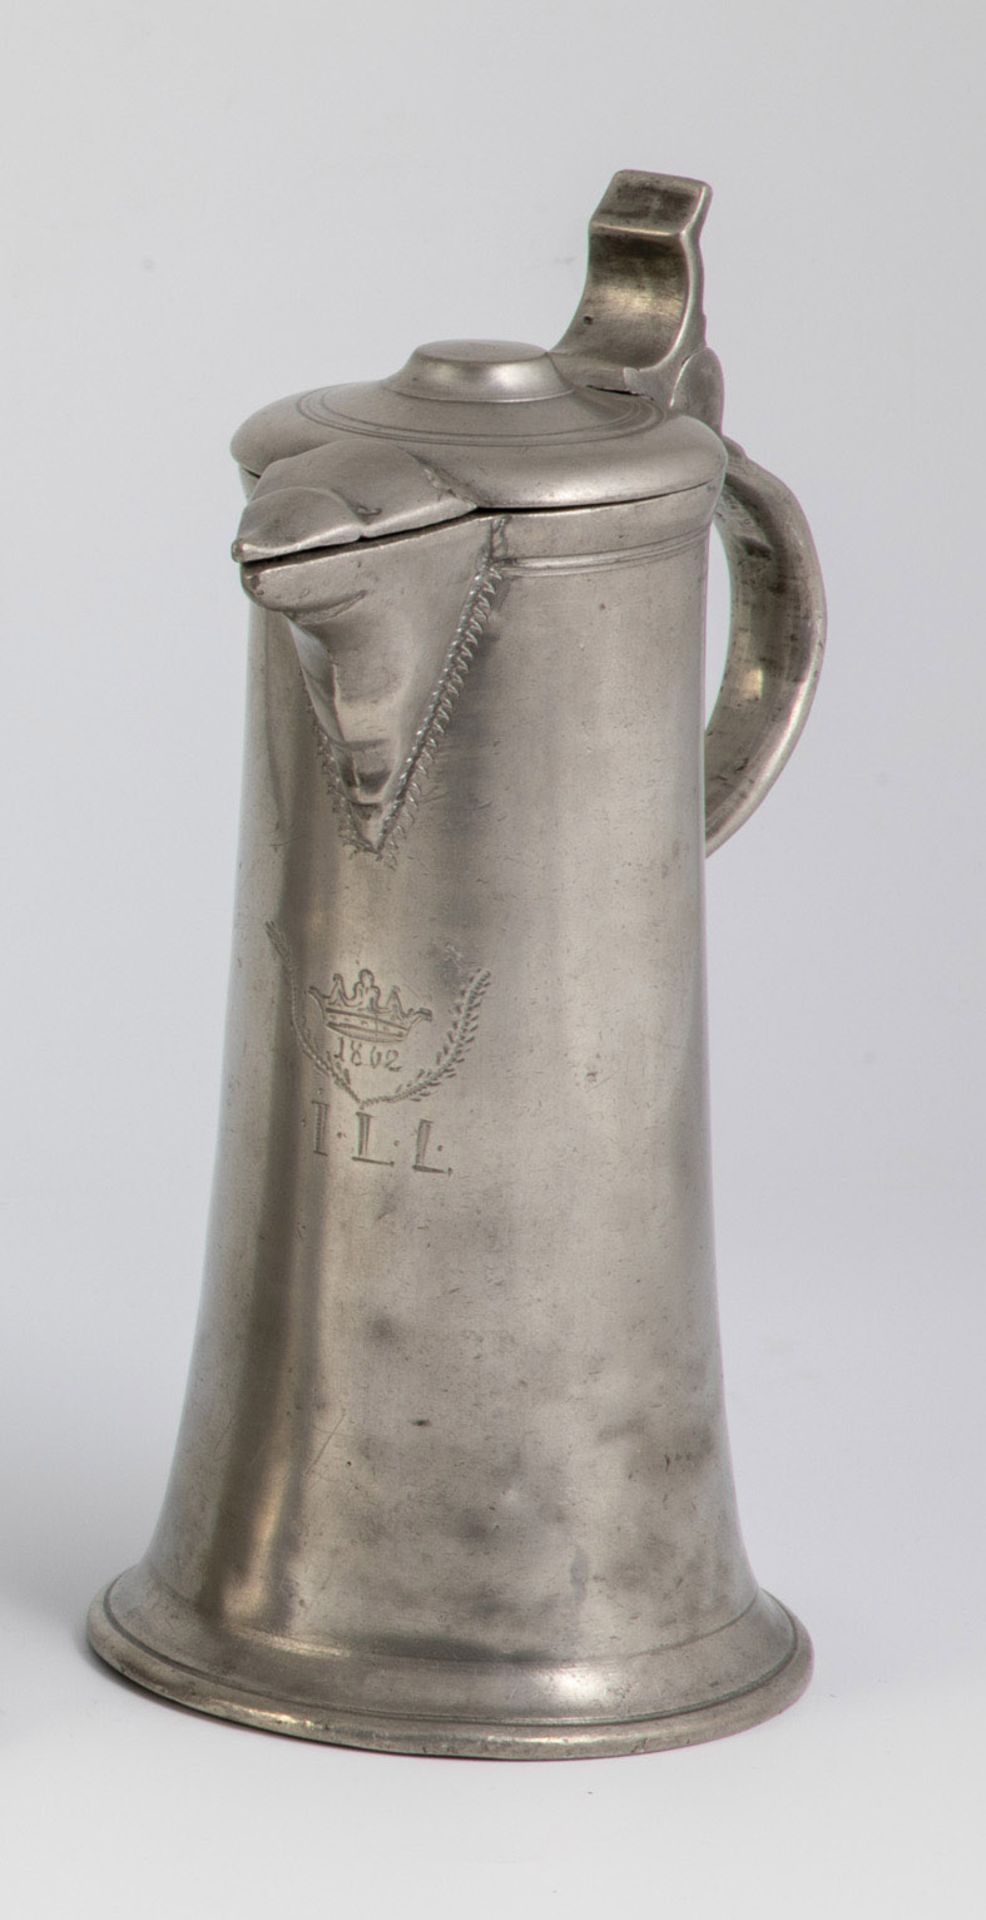 Slender pewter jug with beak spout